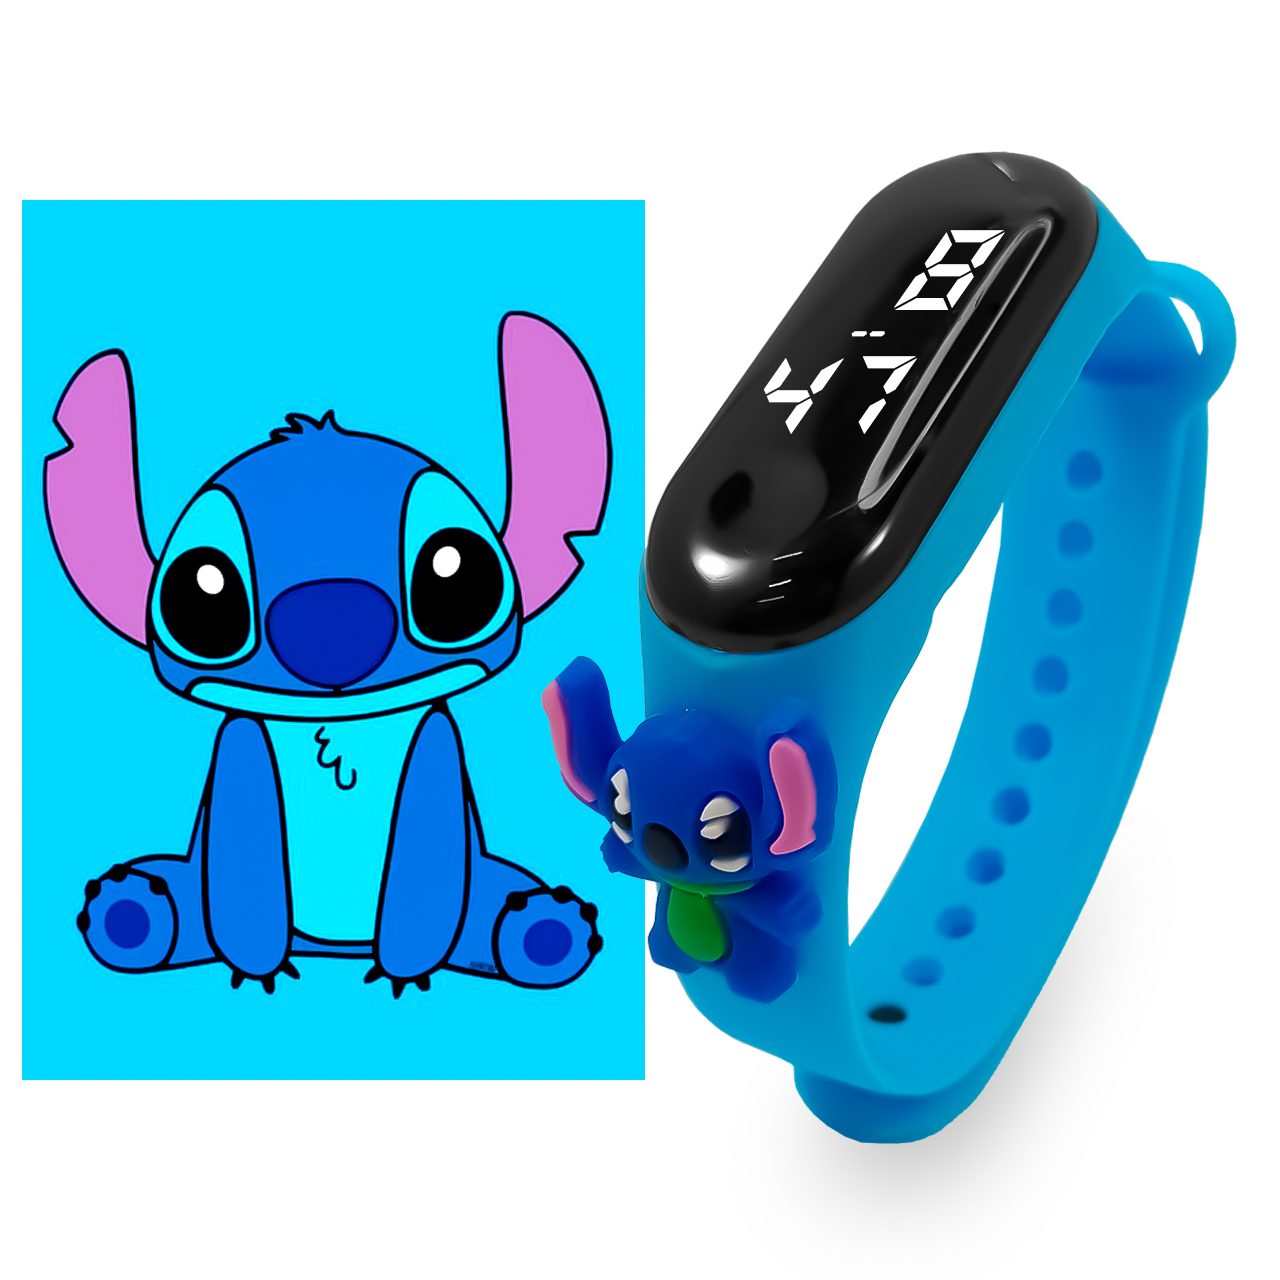 Disney-relojes de Stitch para niños y niñas, pulsera deportiva LED, reloj  Digital electrónico, reloj infantil